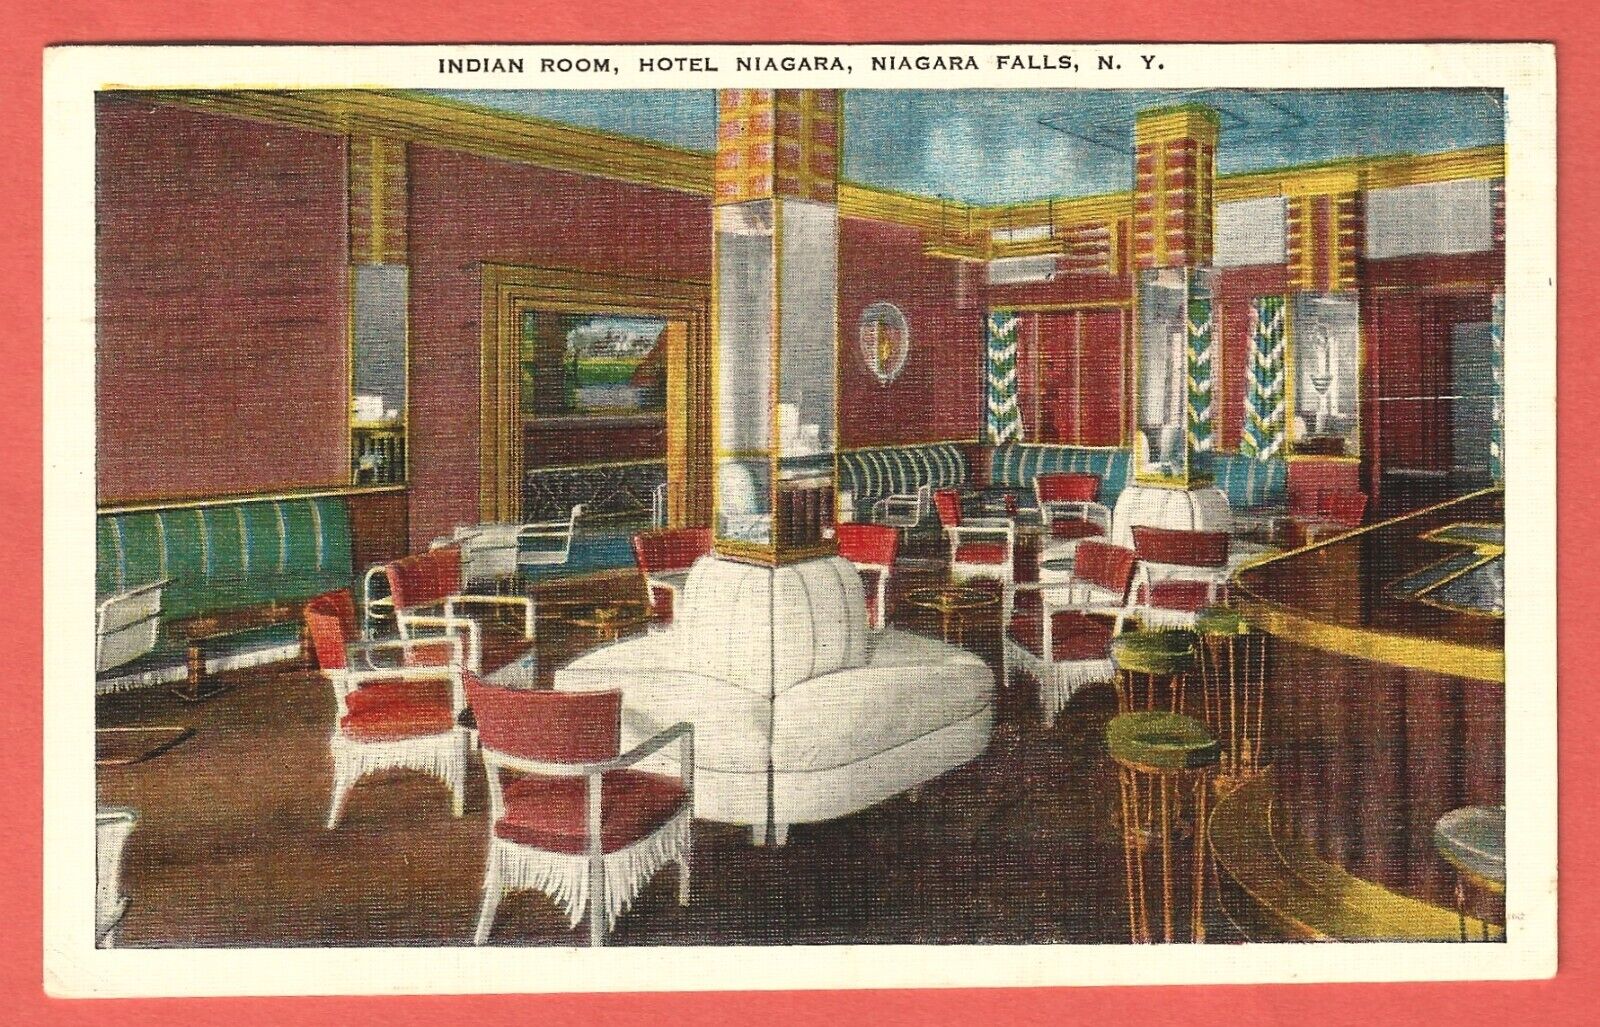 HOTEL NIAGARA, NIAGARA FALLS, N.Y. – INDIAN ROOM – Closed 2007 - 1940s Linen PC